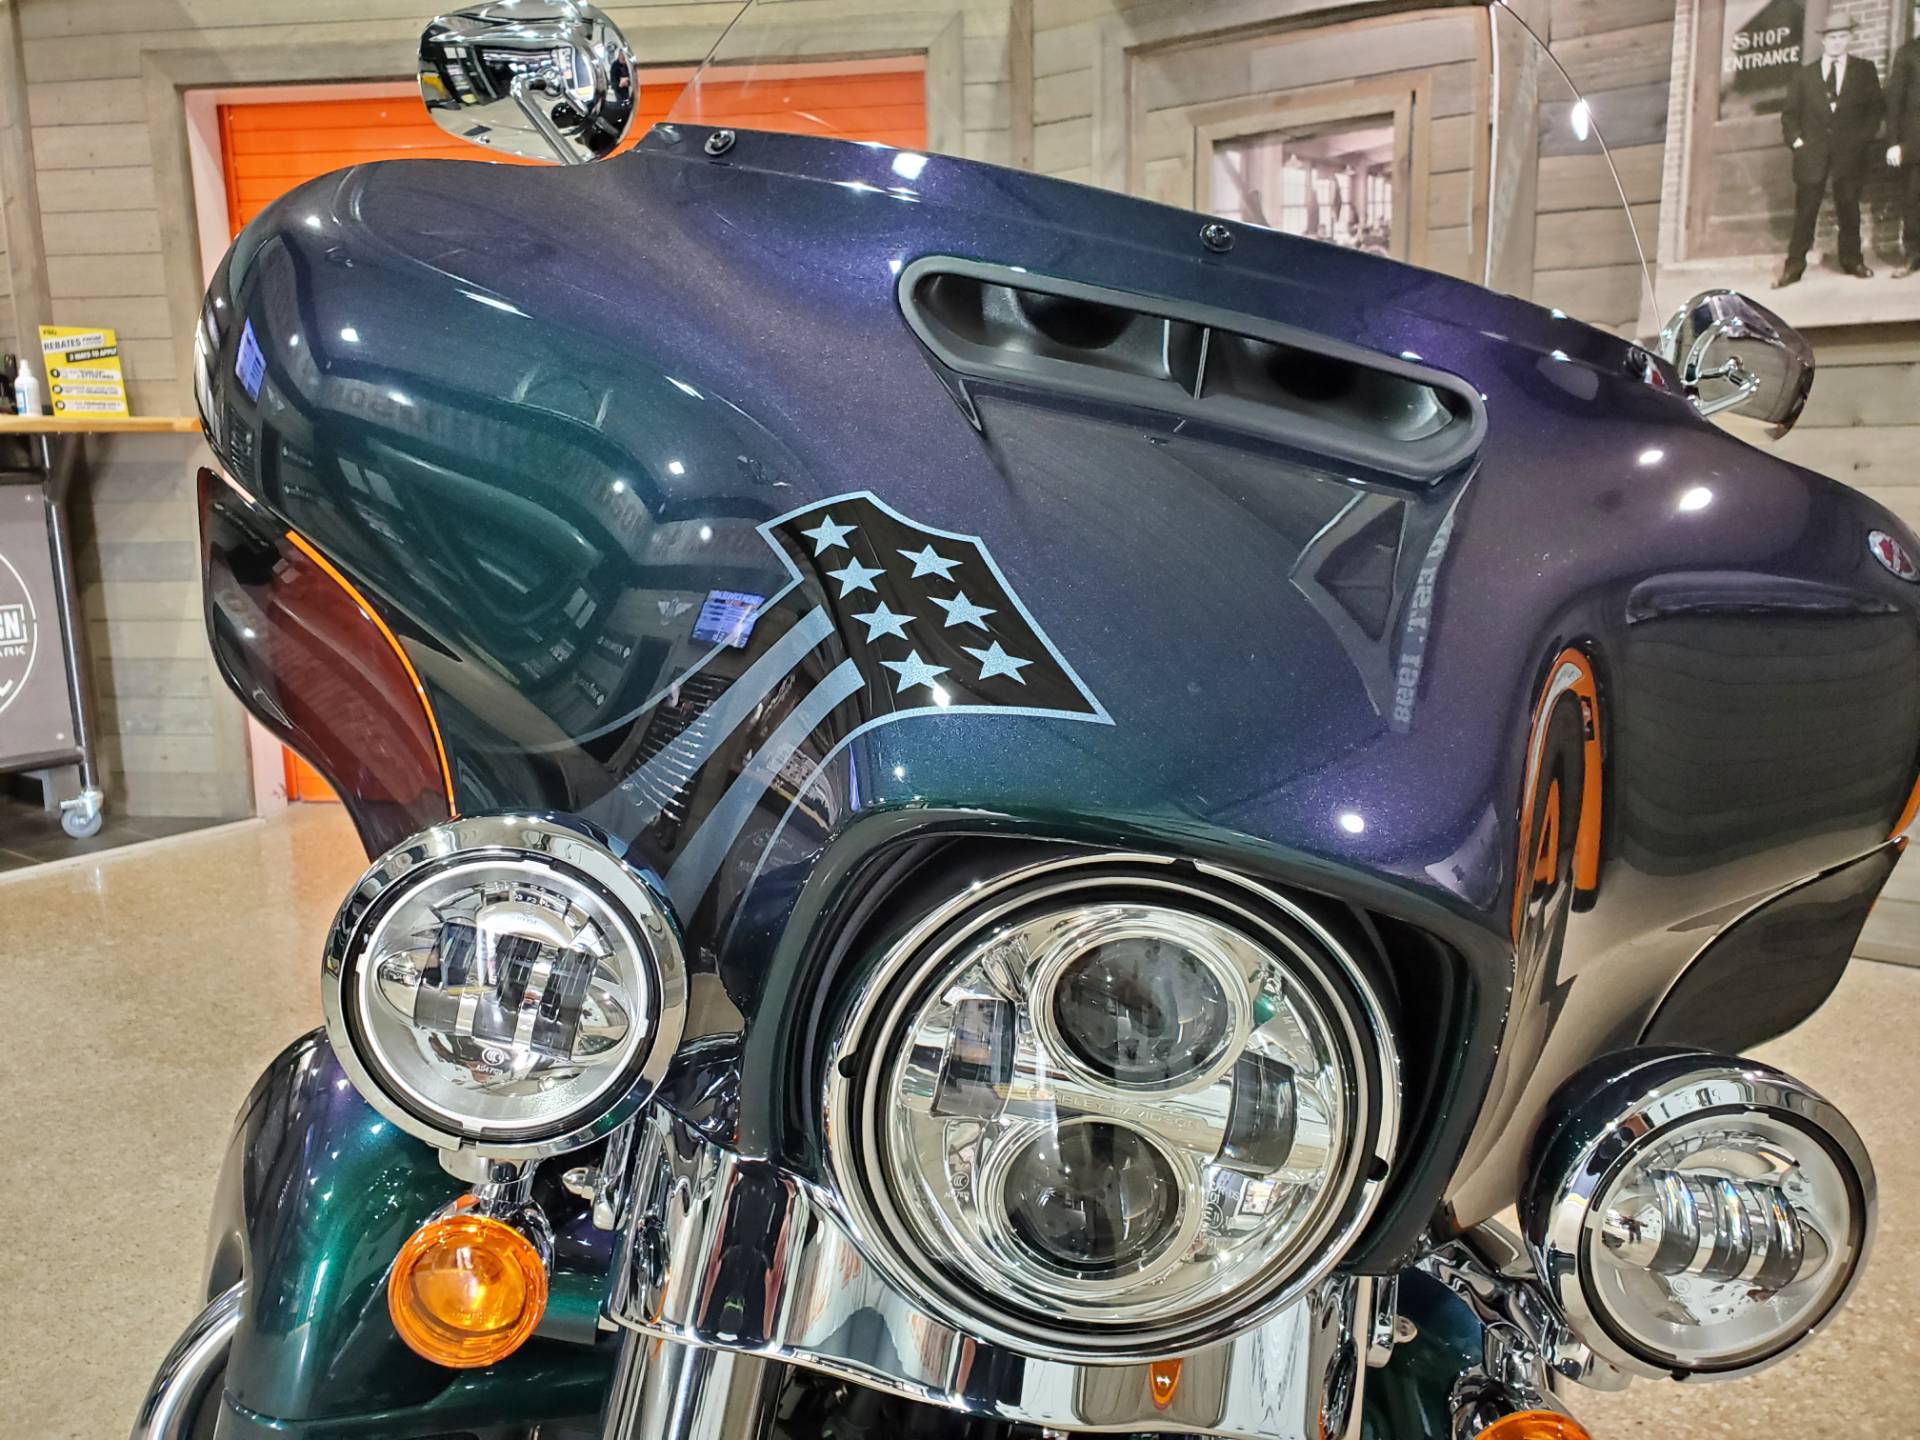 2021 Harley-Davidson Ultra Limited in Kokomo, Indiana - Photo 10